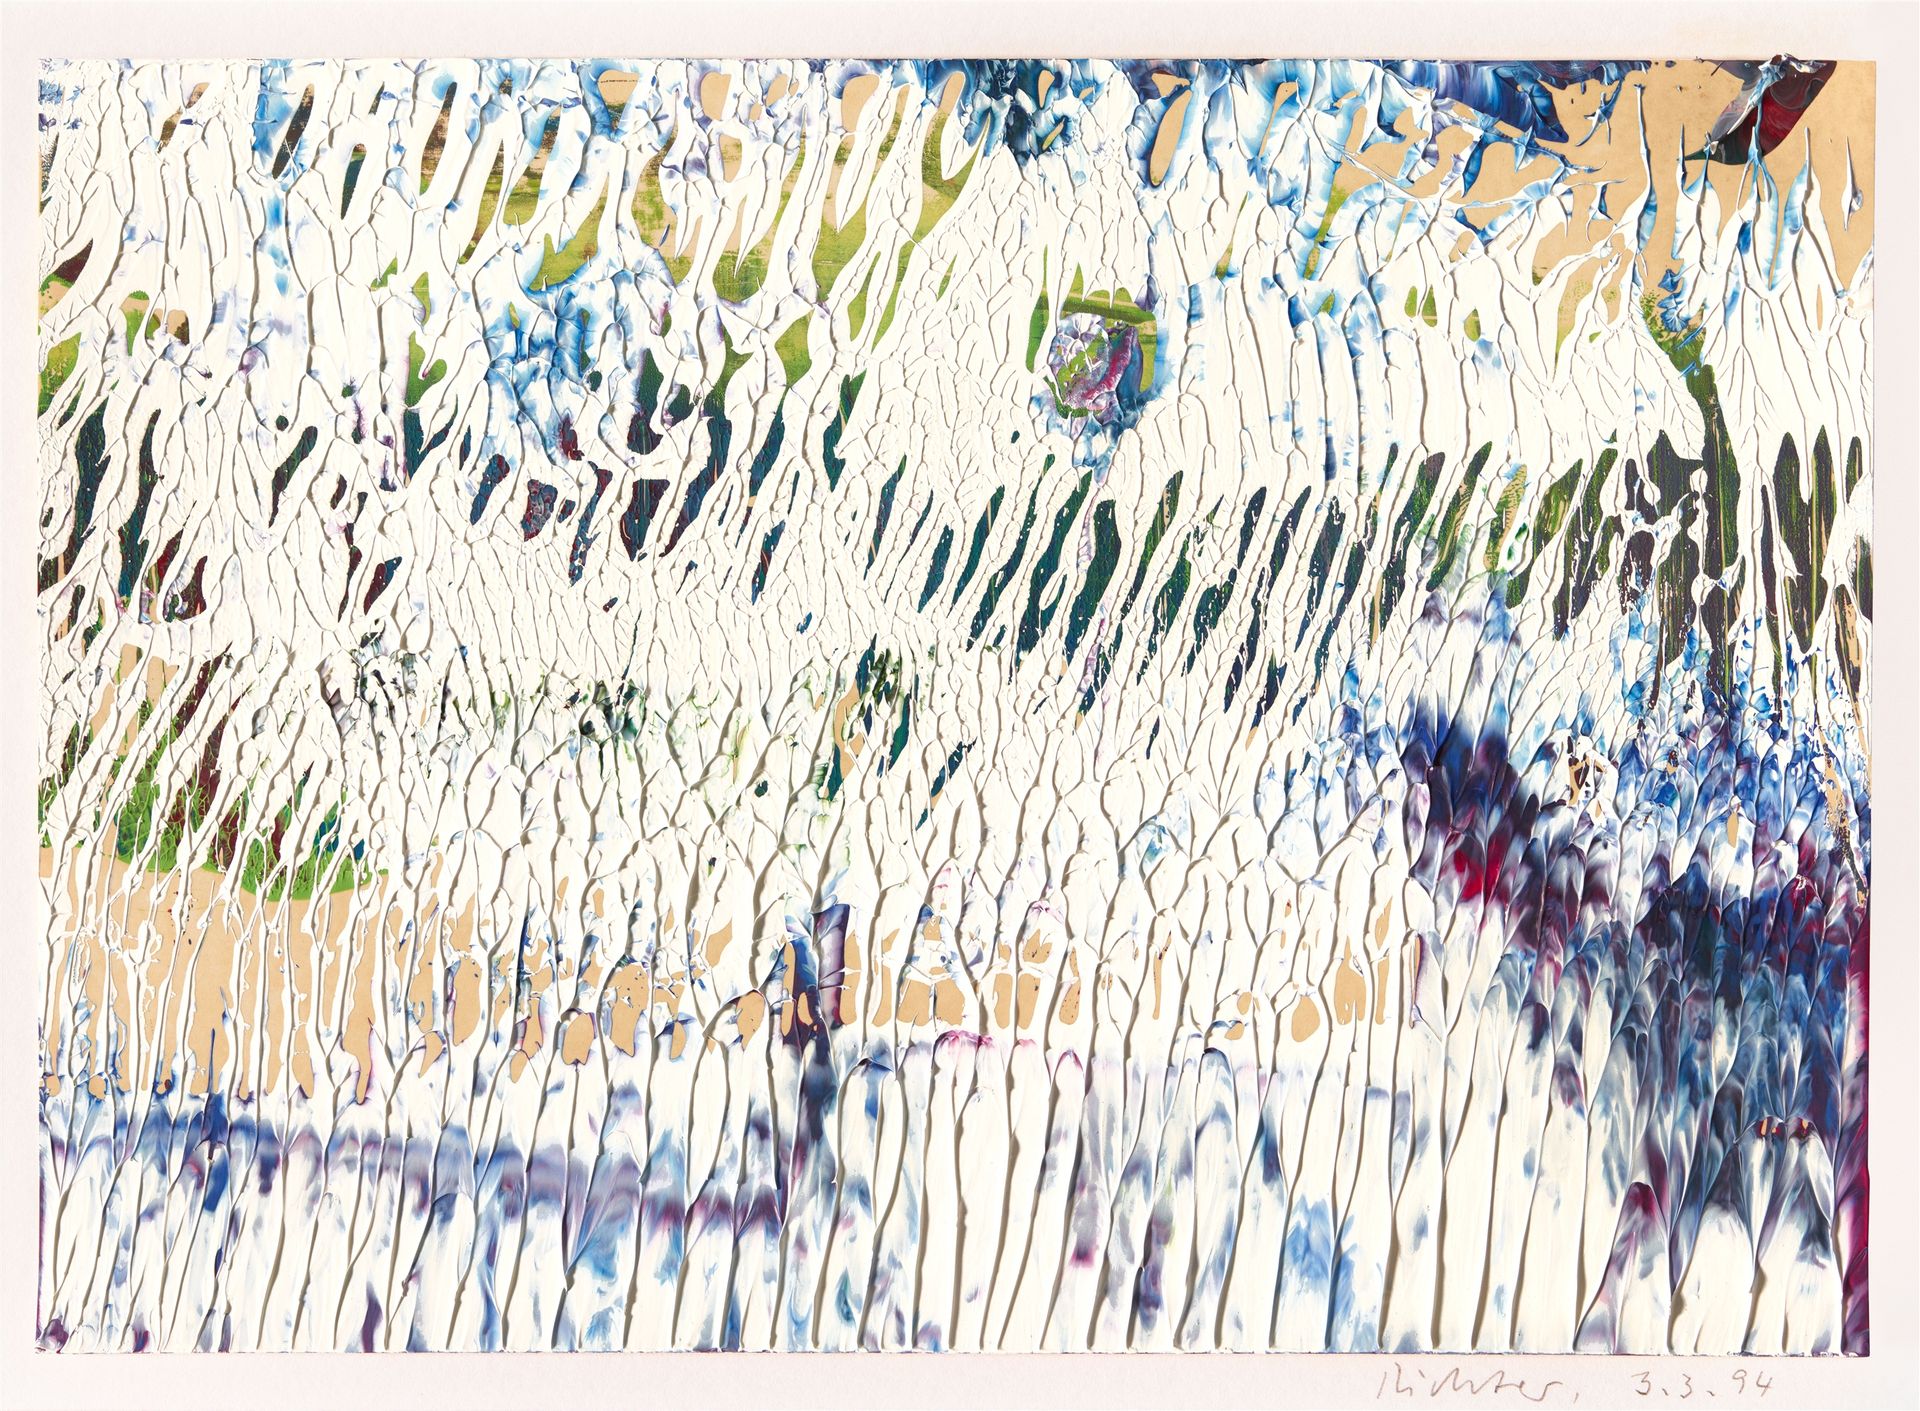 Gerhard Richter Gerhard Richter



3.3.94

1994



Huile sur carton 21 x 29,8 cm&hellip;